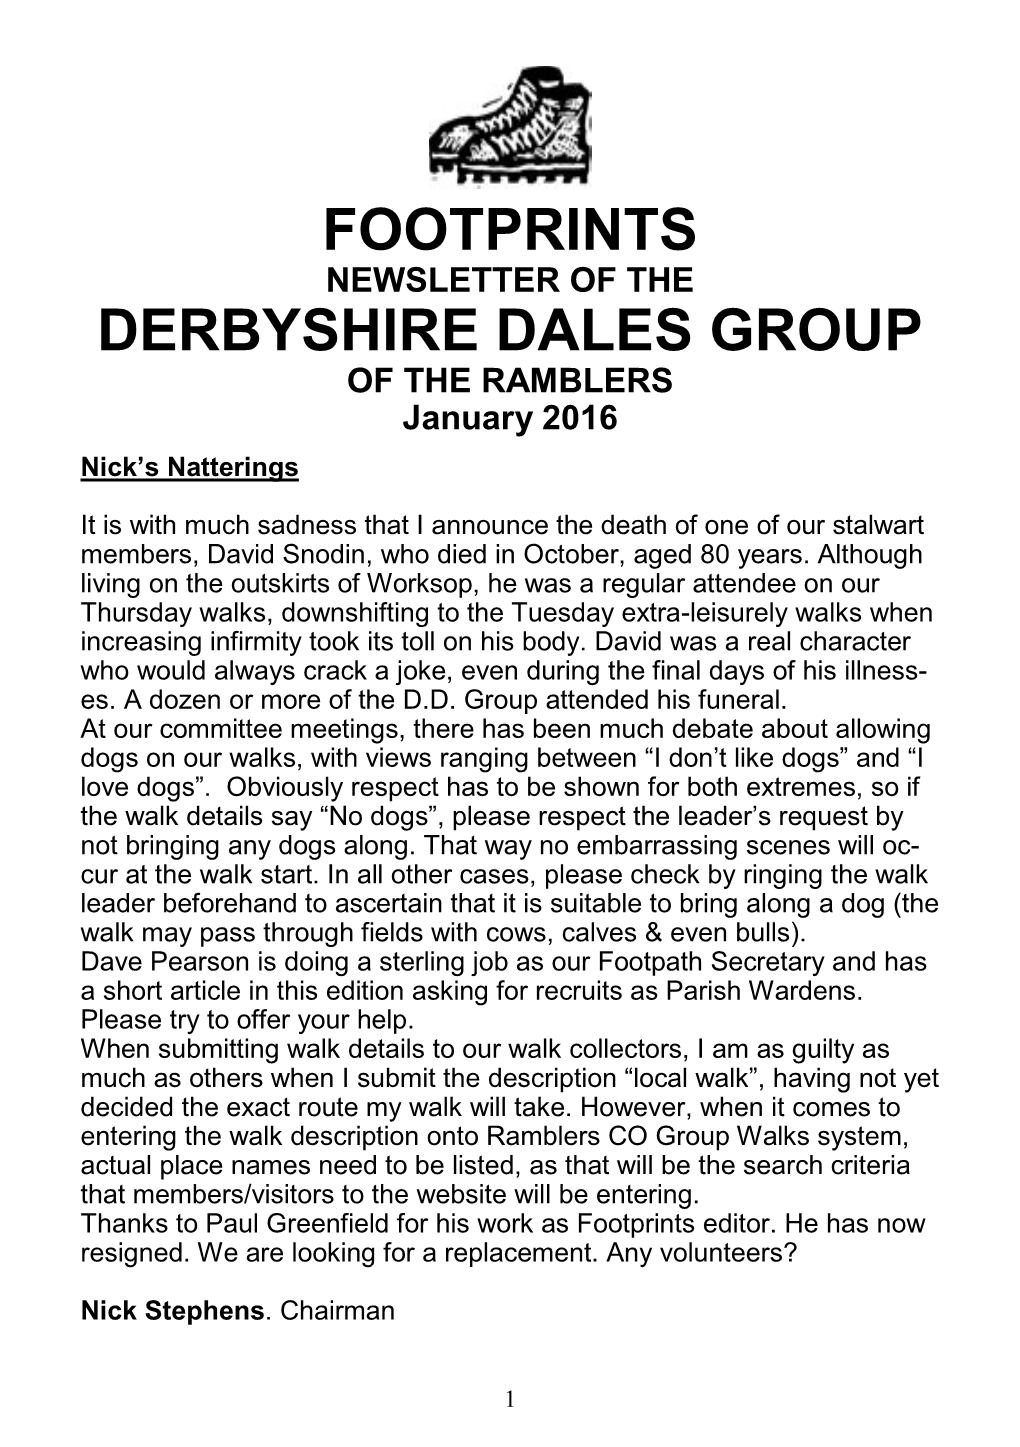 Footprints Derbyshire Dales Group